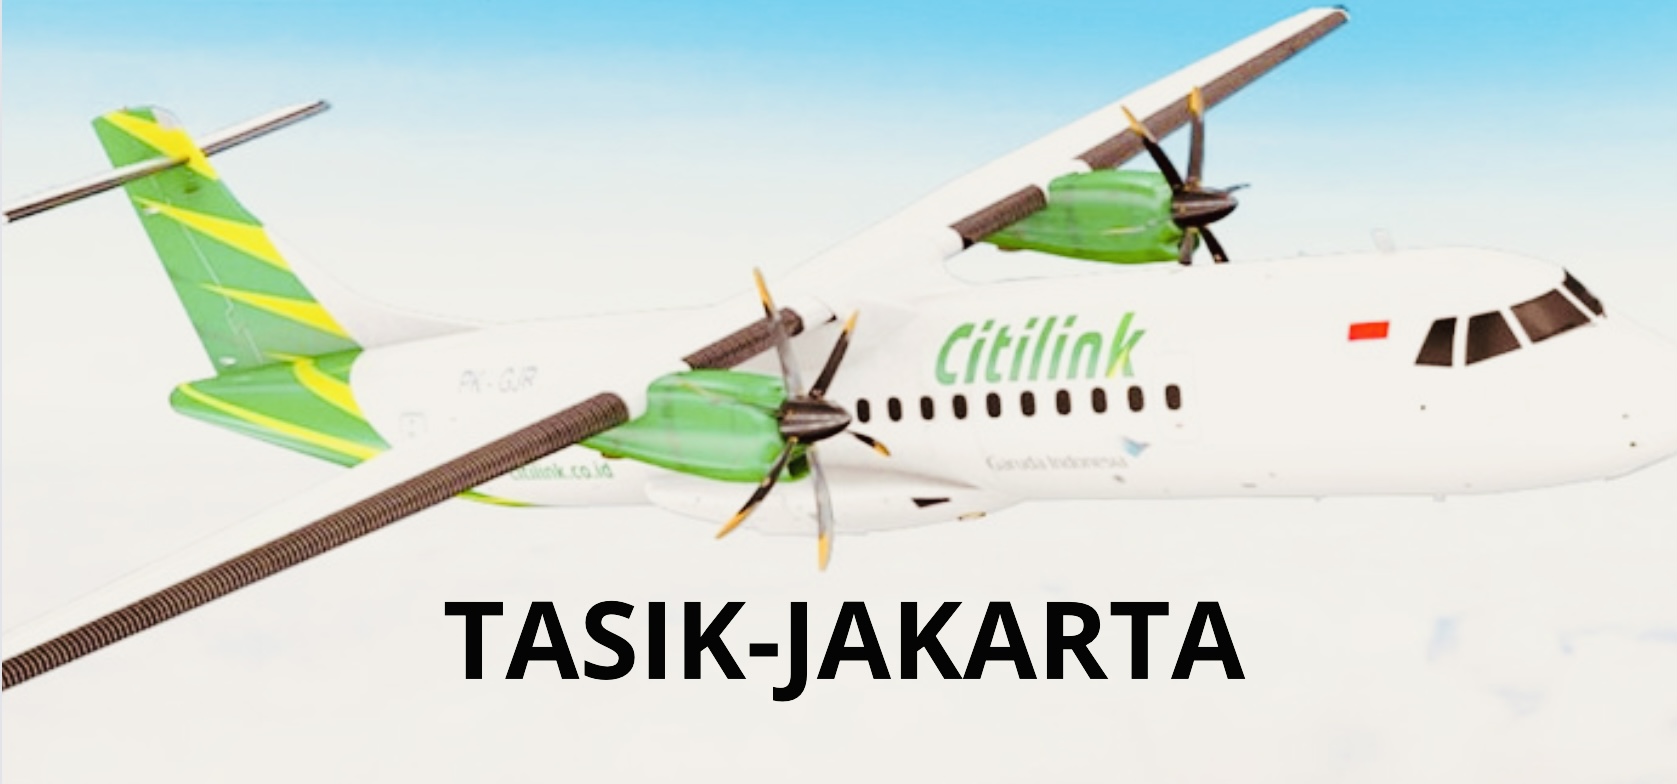 Bersiap Rute Perjalanan Tasik-Jakarta Cuma 45 Menit, Besok 18 September Pemkot Tasikmalaya MoU dengan Citilink